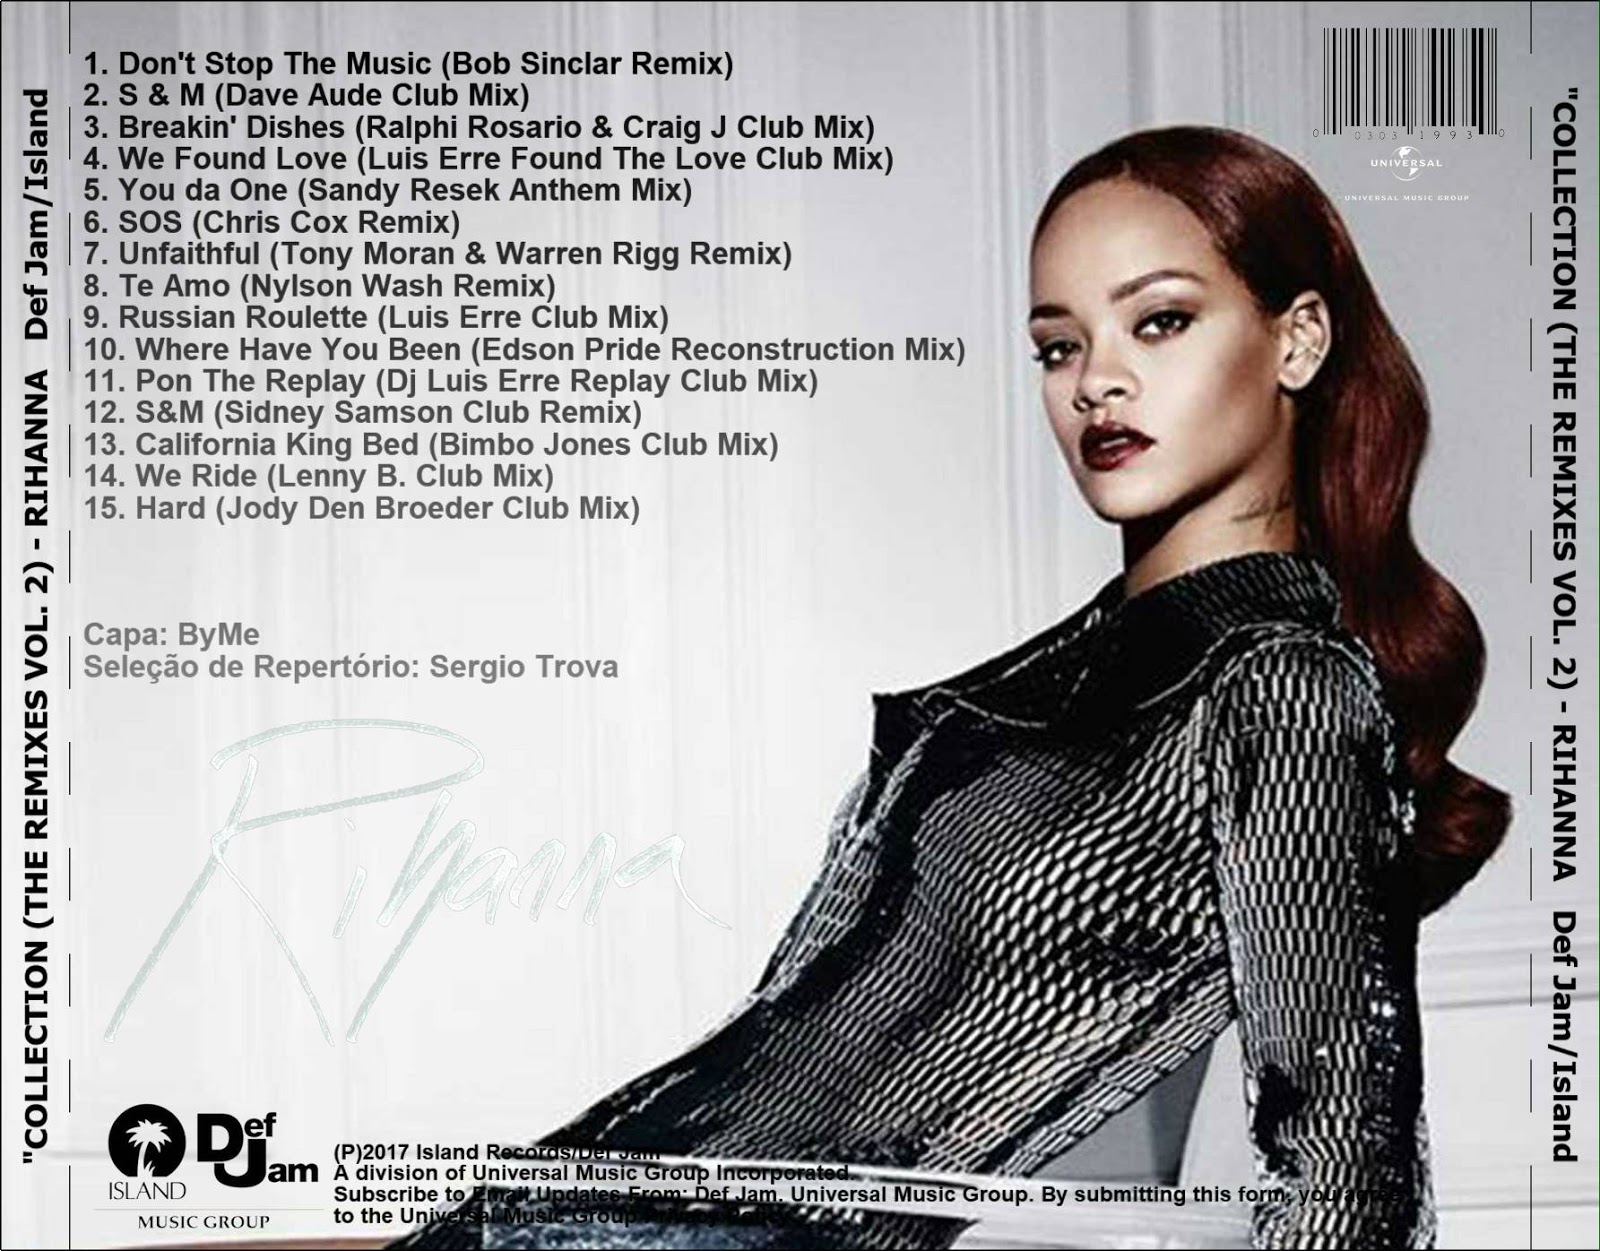 Песня breaking dishes. Breakin dishes Rihanna текст.